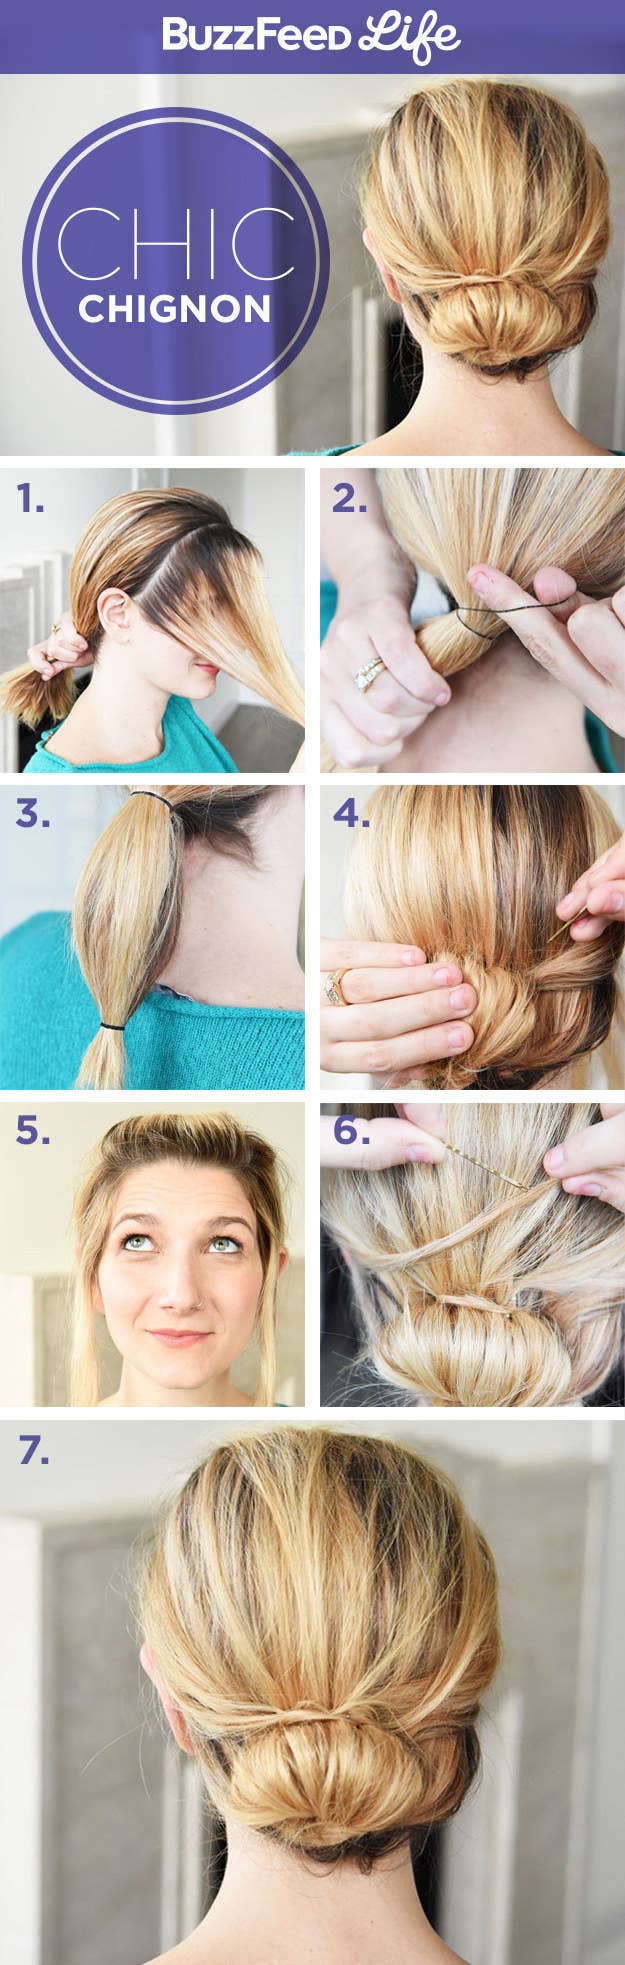 42 Easy Hairstyles For Medium-Length Hair